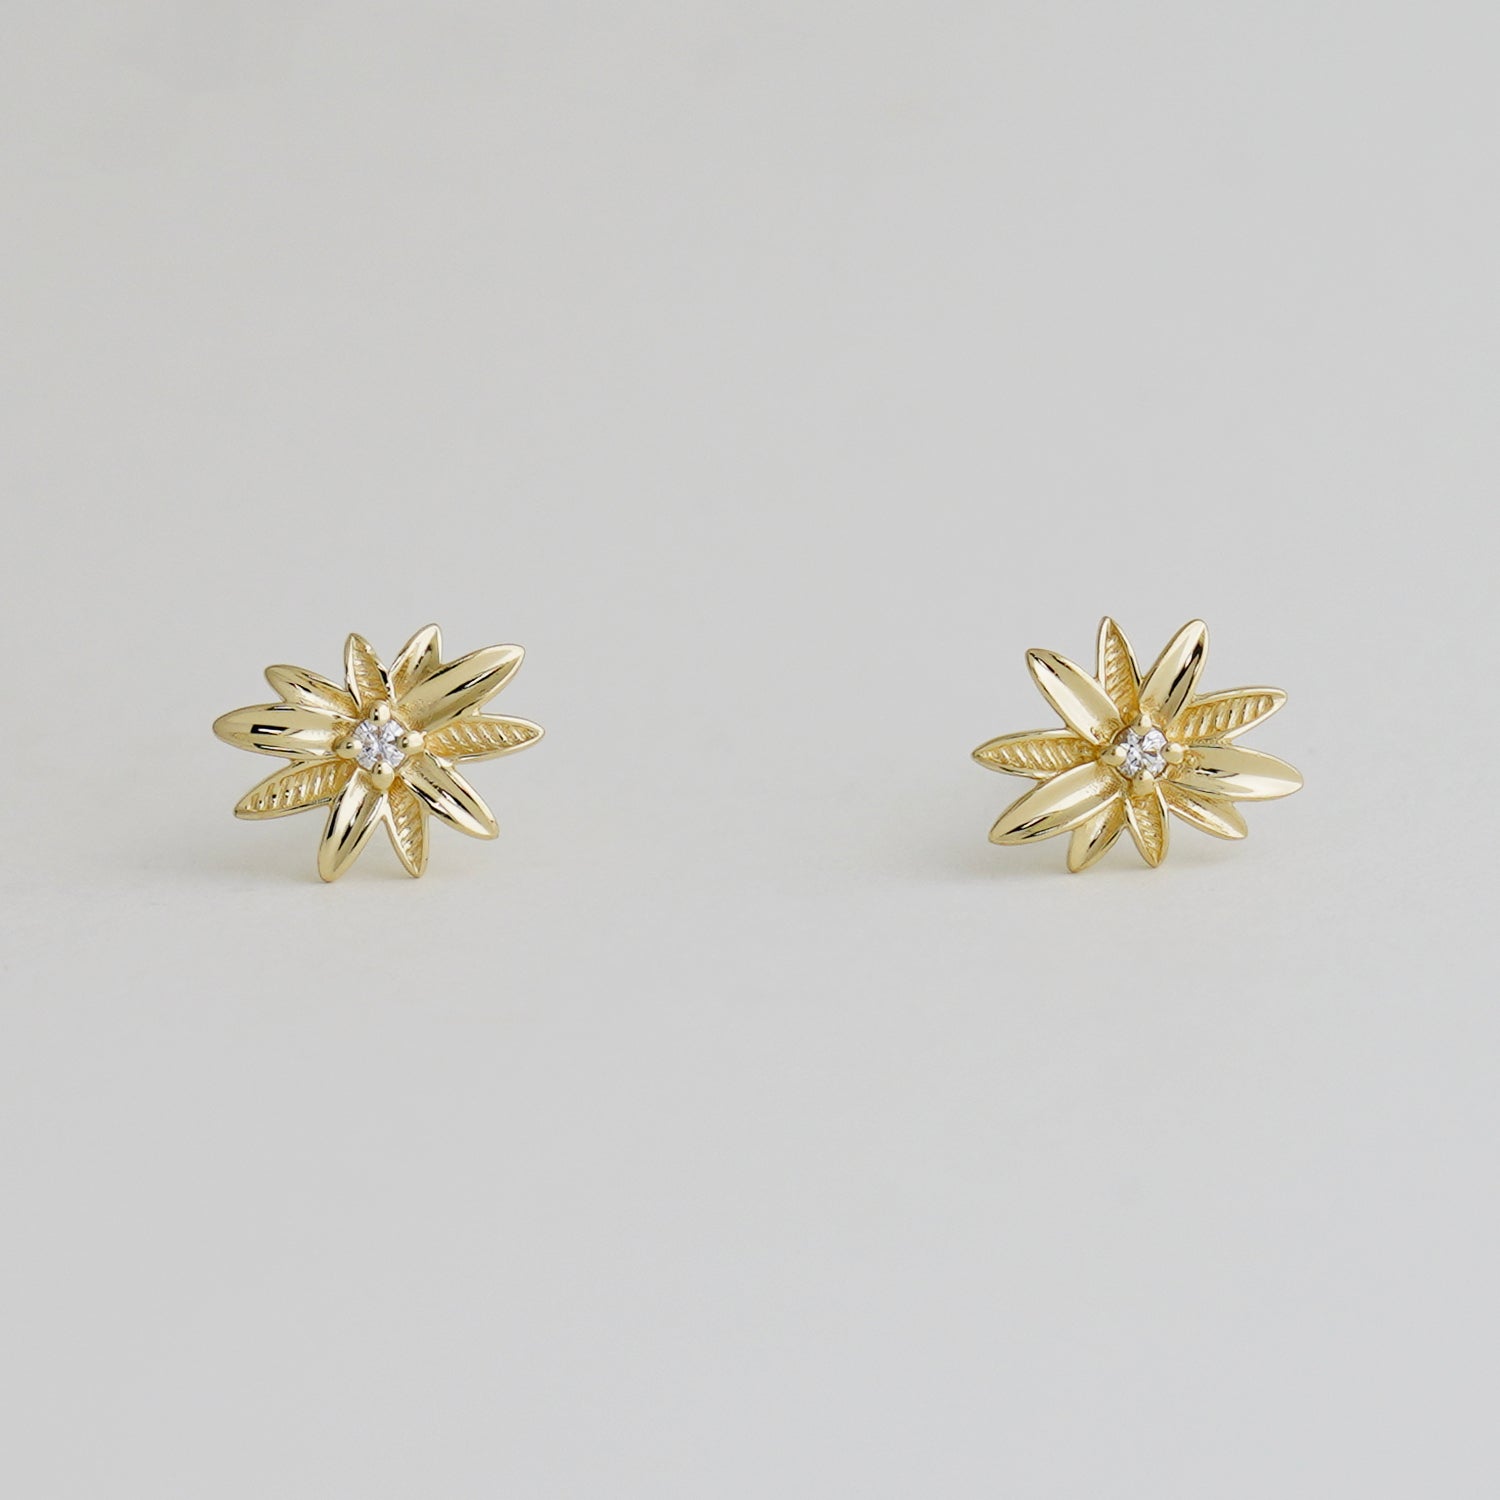 Buy 14K Solid Gold Cubic Zirconia Flower Stud Earrings